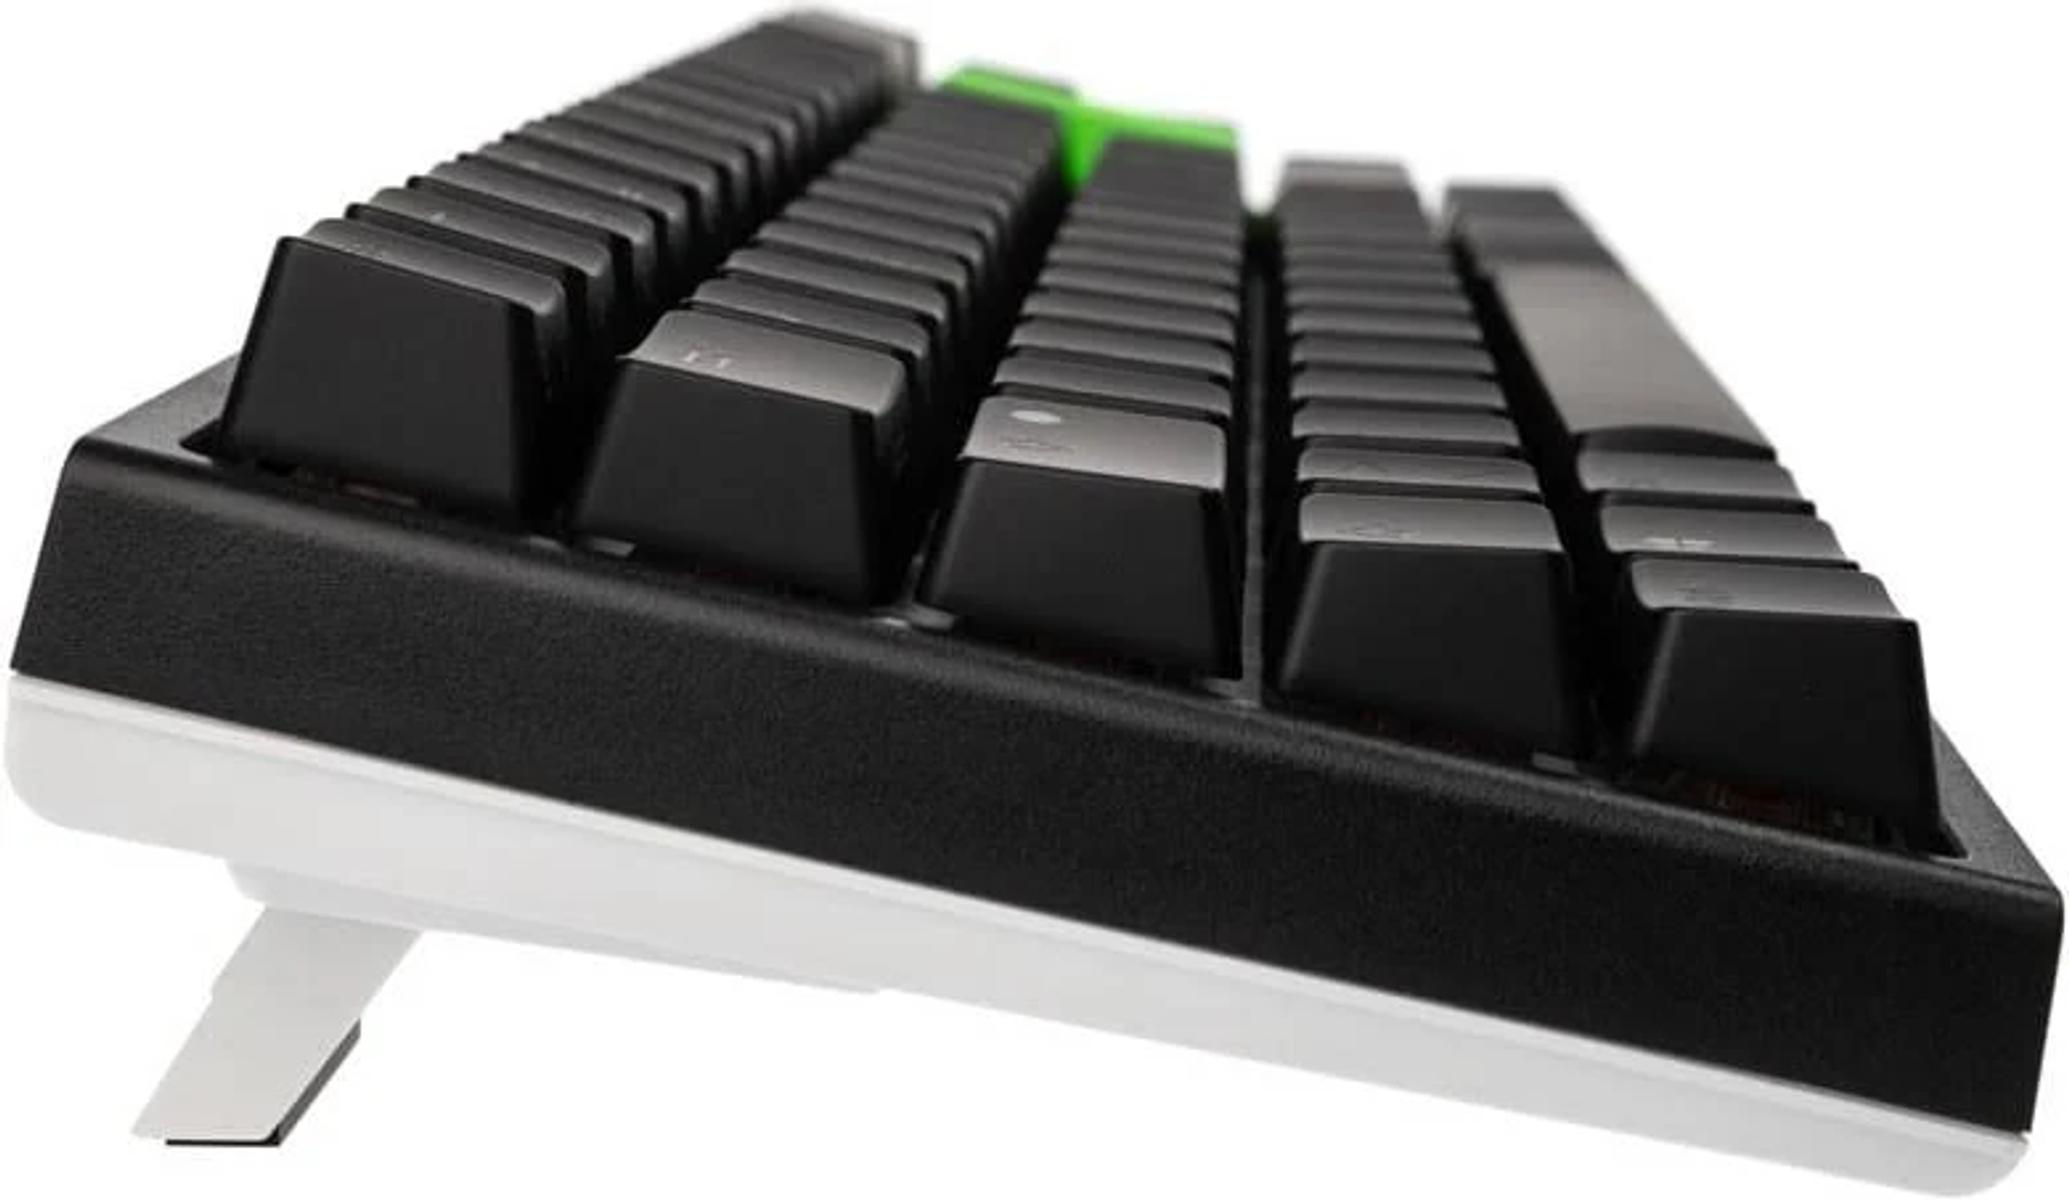 Speed DUCKY MX Tastatur, Cherry DKON1967ST-PSZALAZT1, Gaming